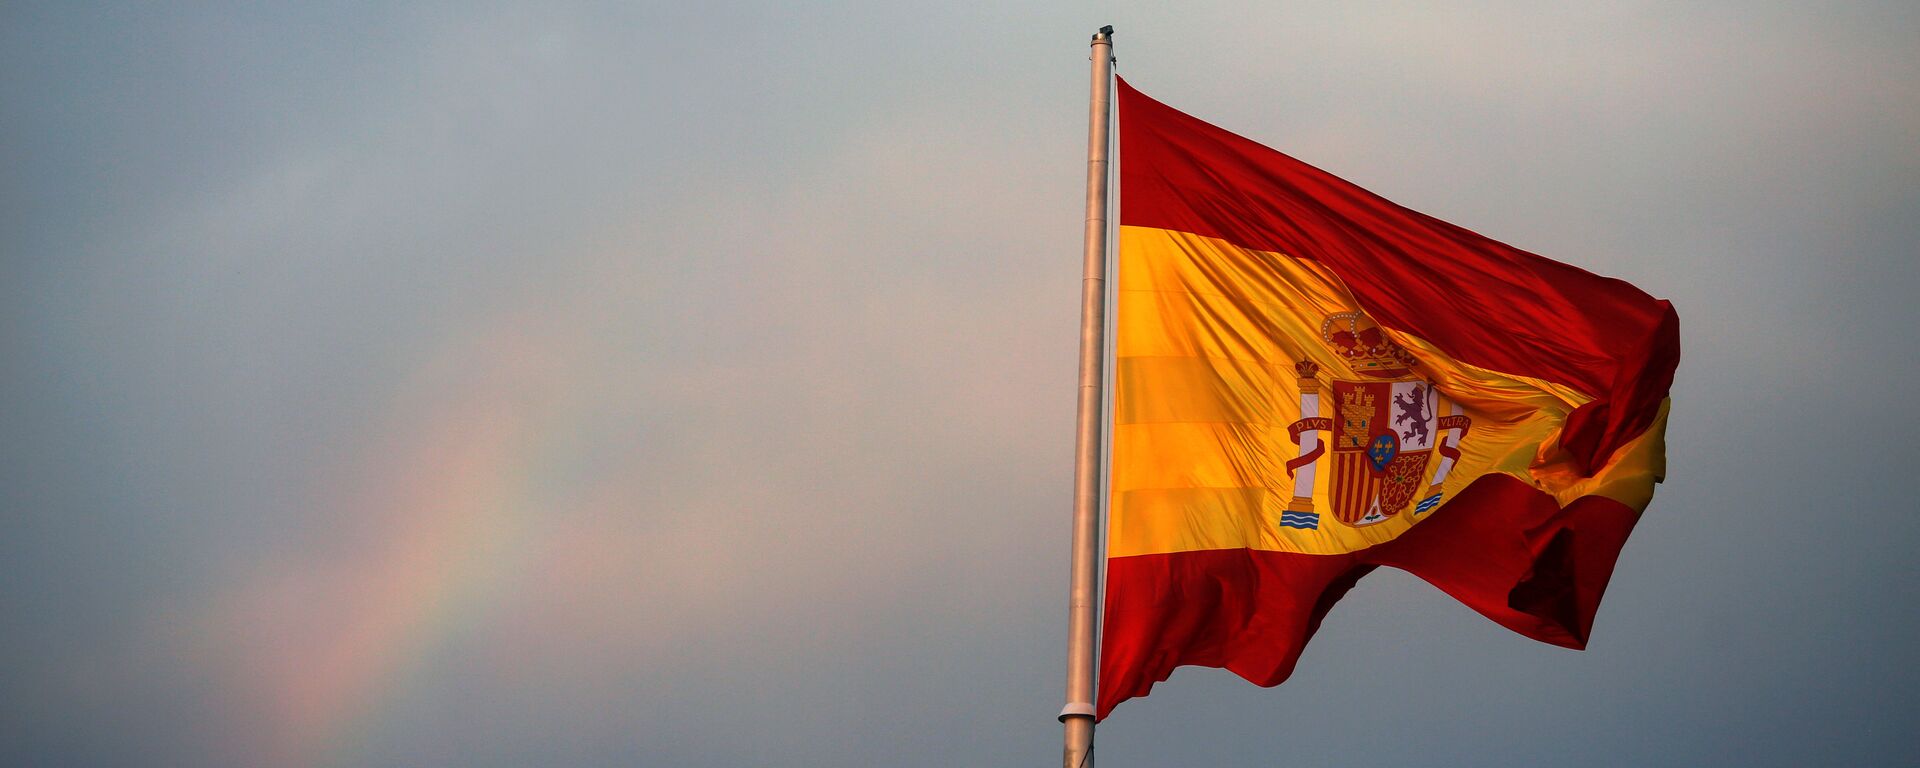 Bandera de España - Sputnik Mundo, 1920, 04.12.2020